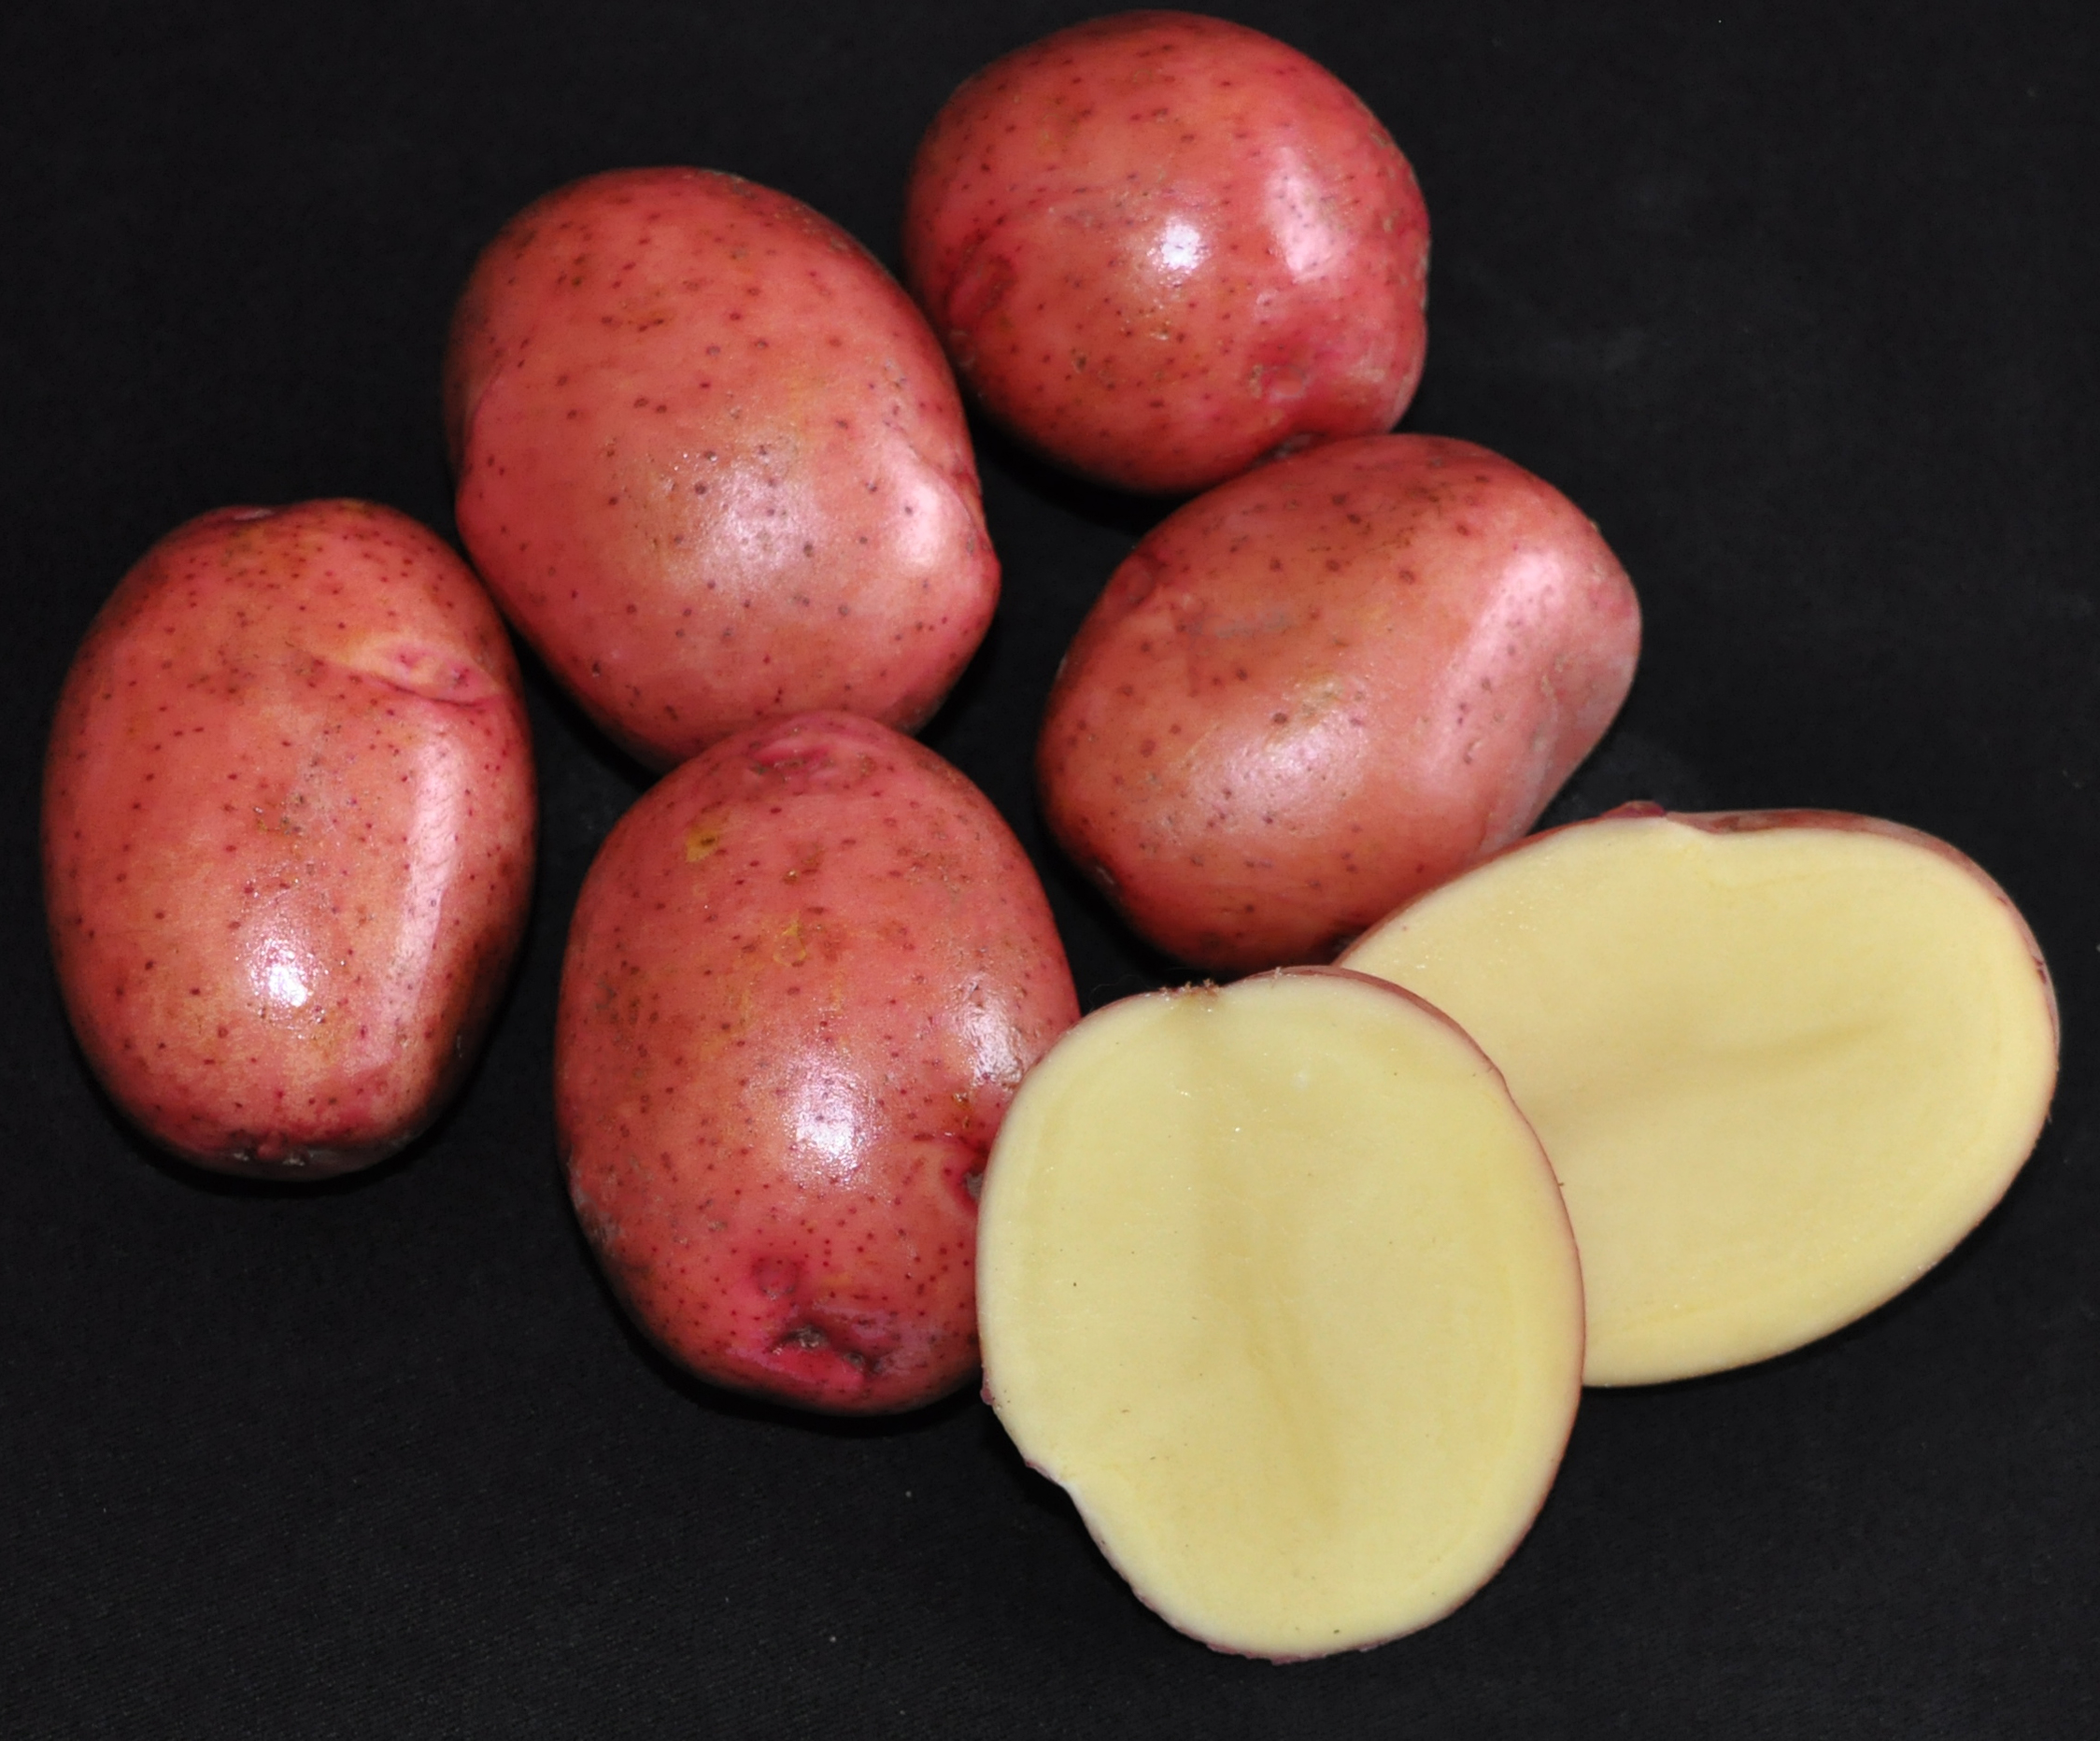 hutton potato breeding